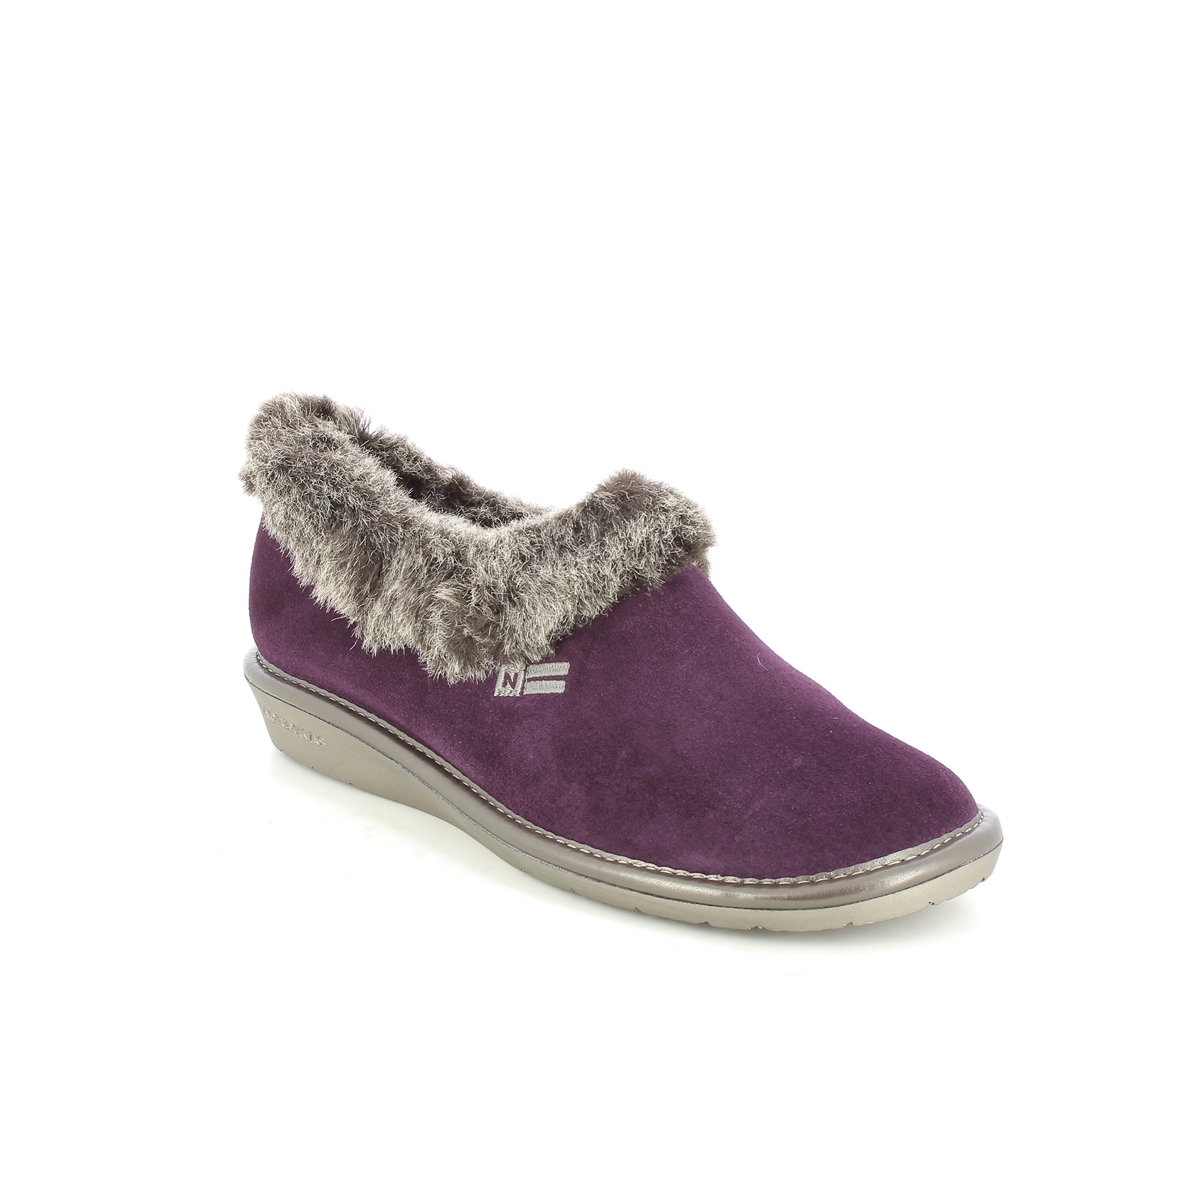 Nordikas Toasty Fur Purple Suede Womens Slippers 1358-95 In Size 37 In Plain Purple Suede